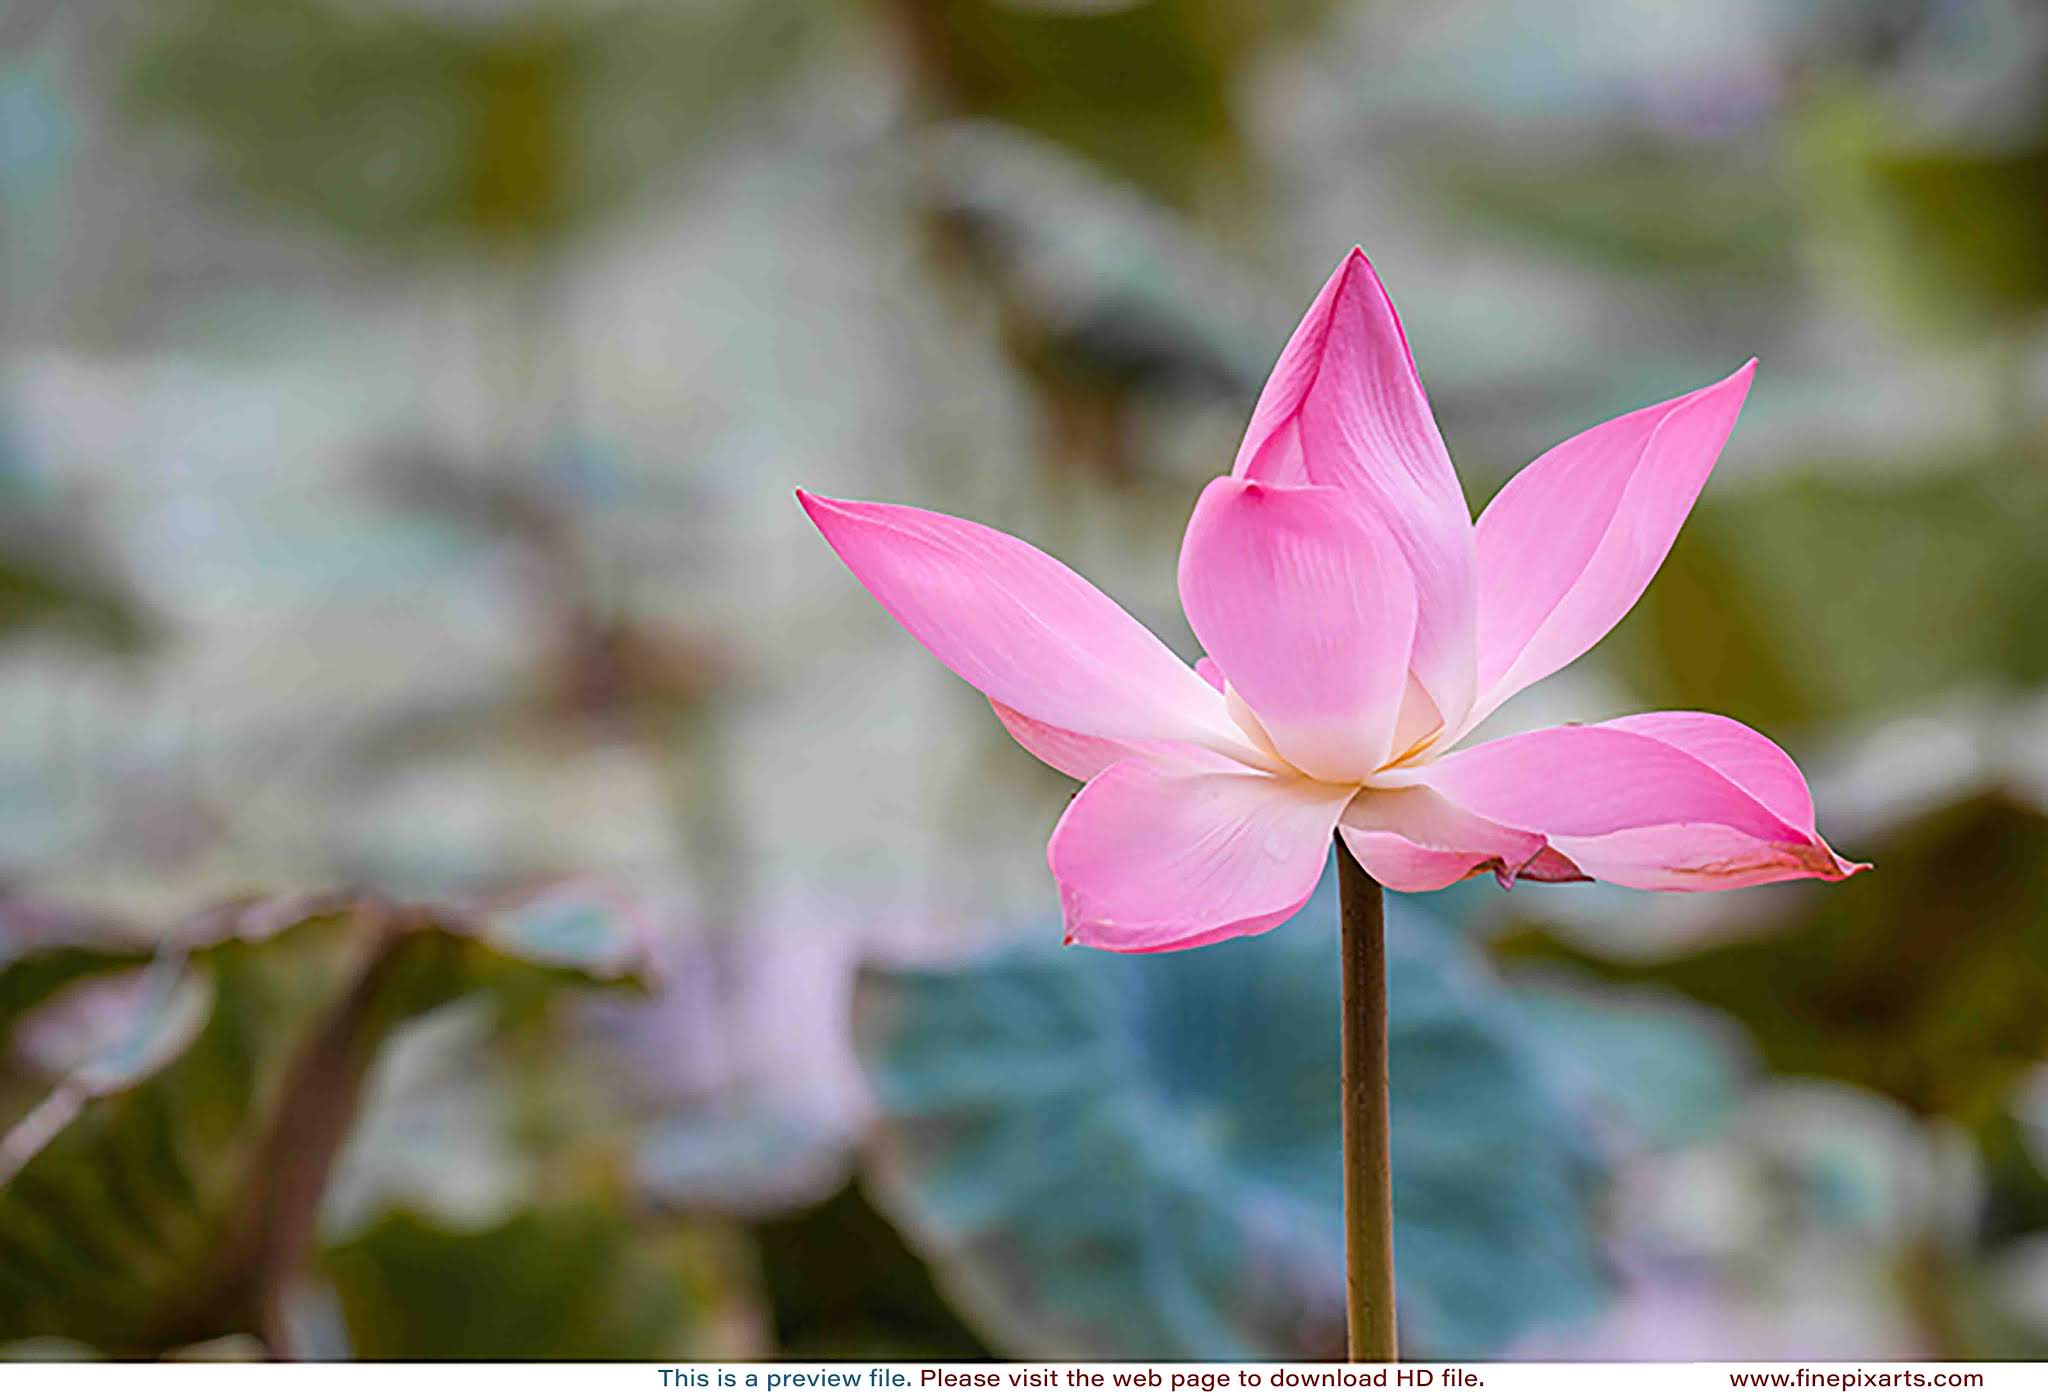 Lotus flower 00010